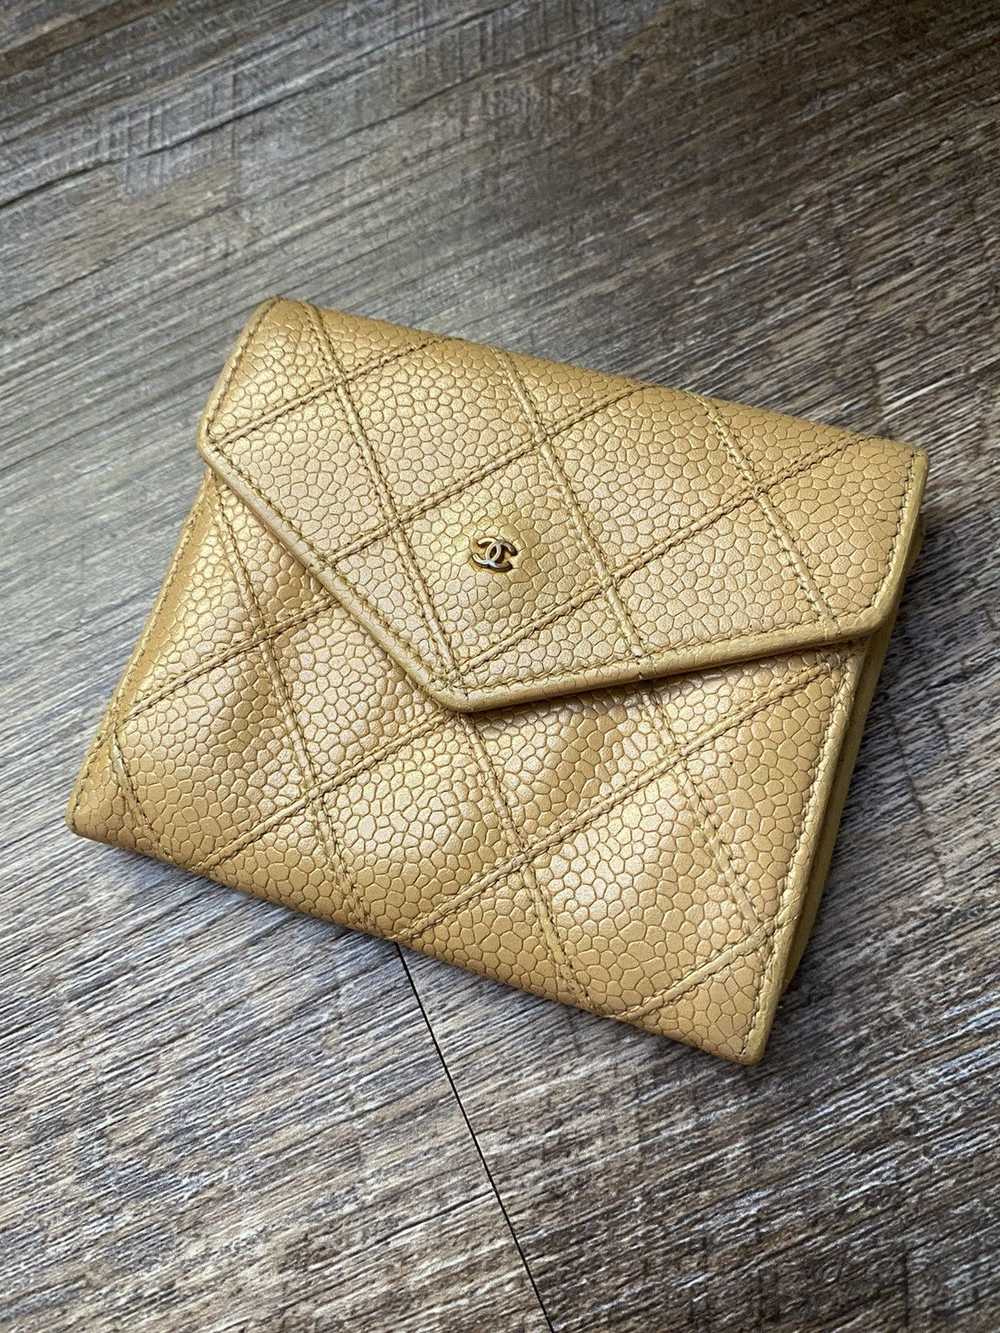 Chanel Chanel CC Caviar leather coin purse - image 2